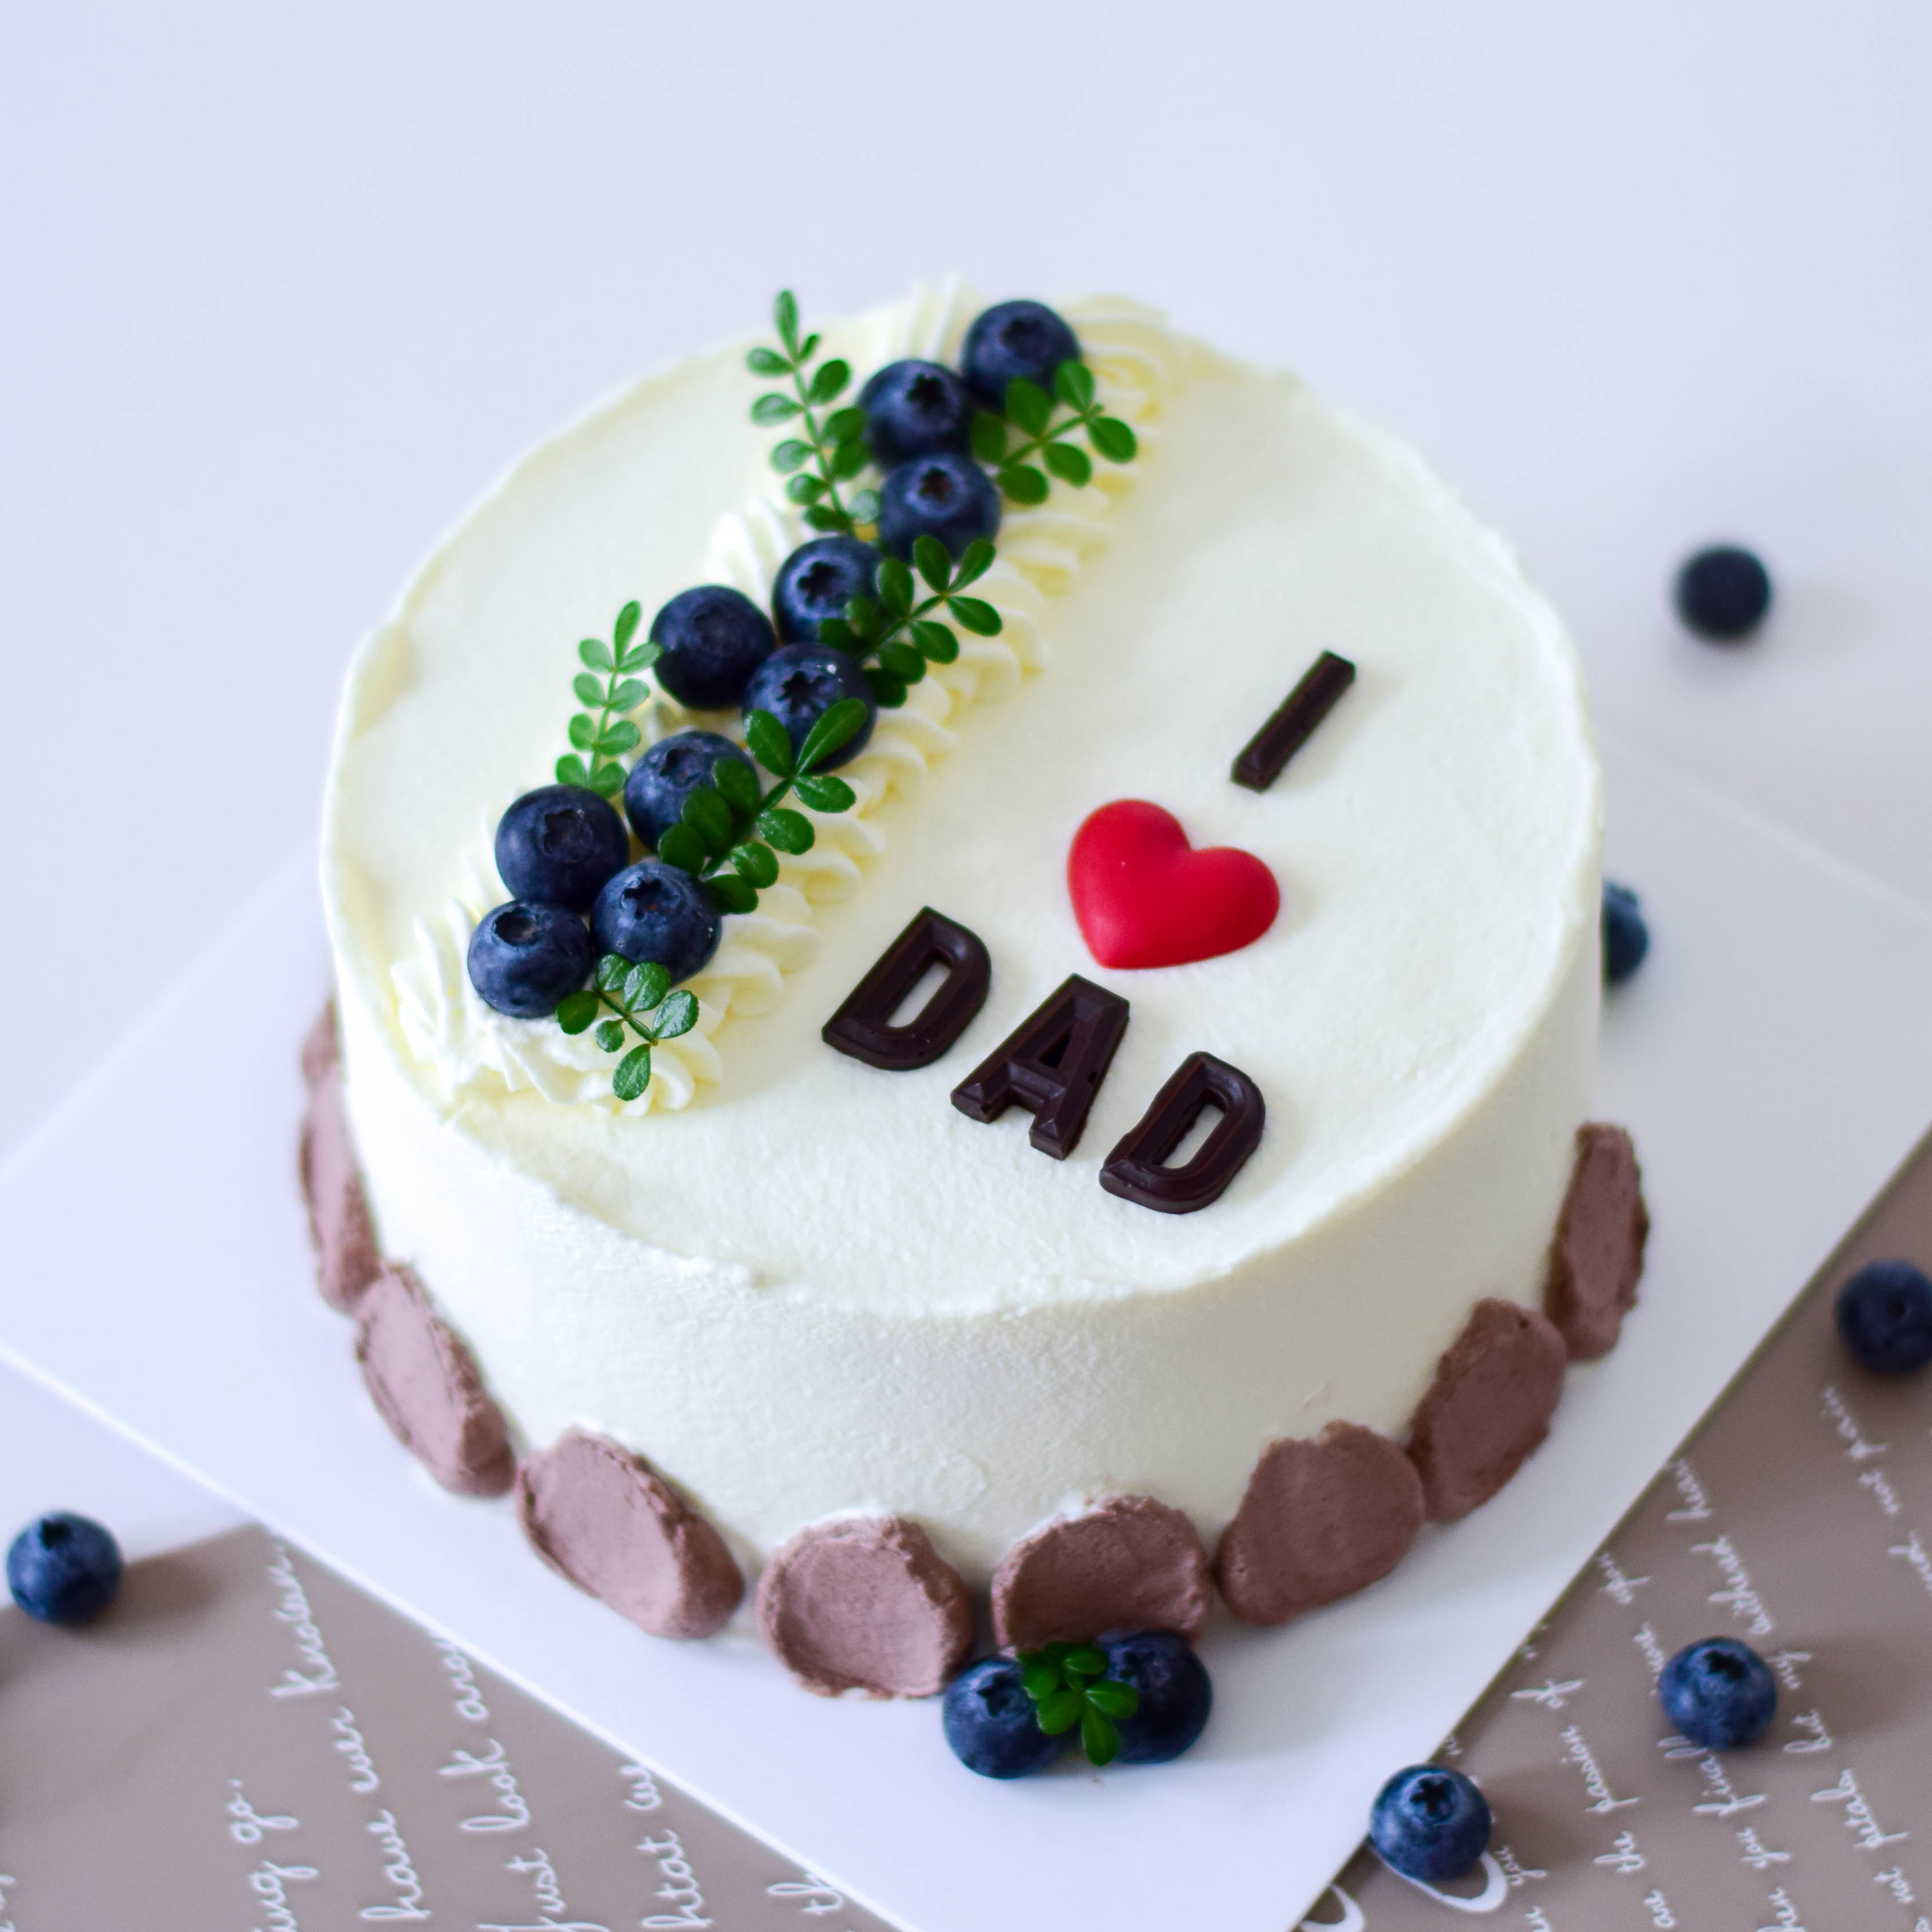 I ♥ DAD